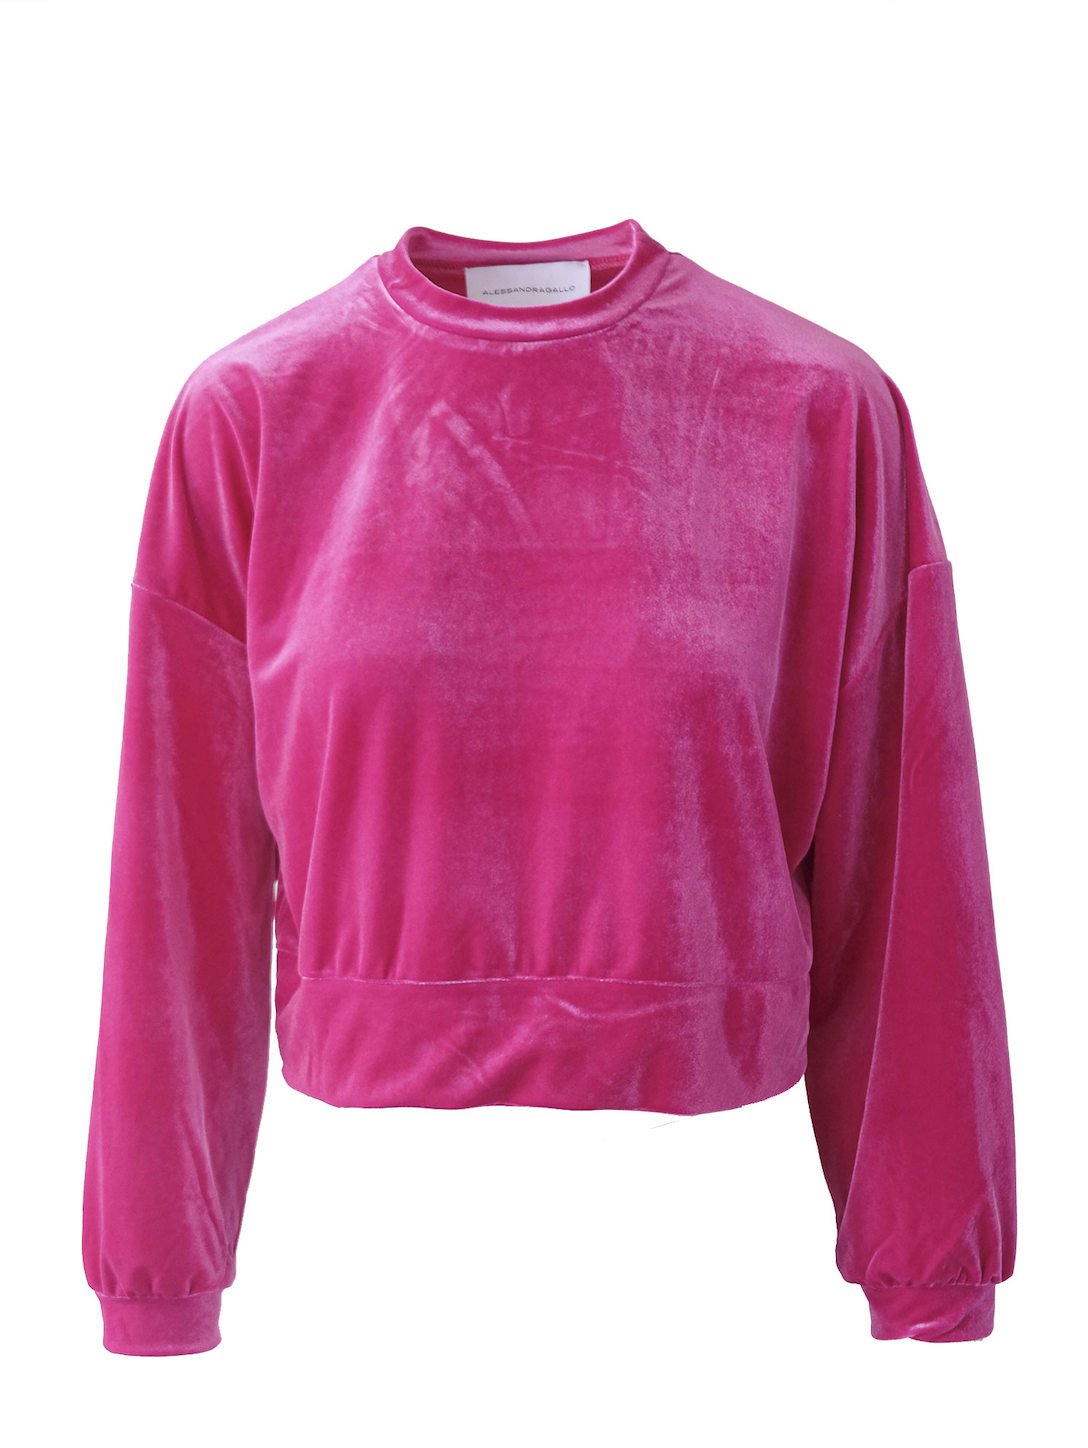 IOLE - cropped sweatshirt in fuchsia chenille